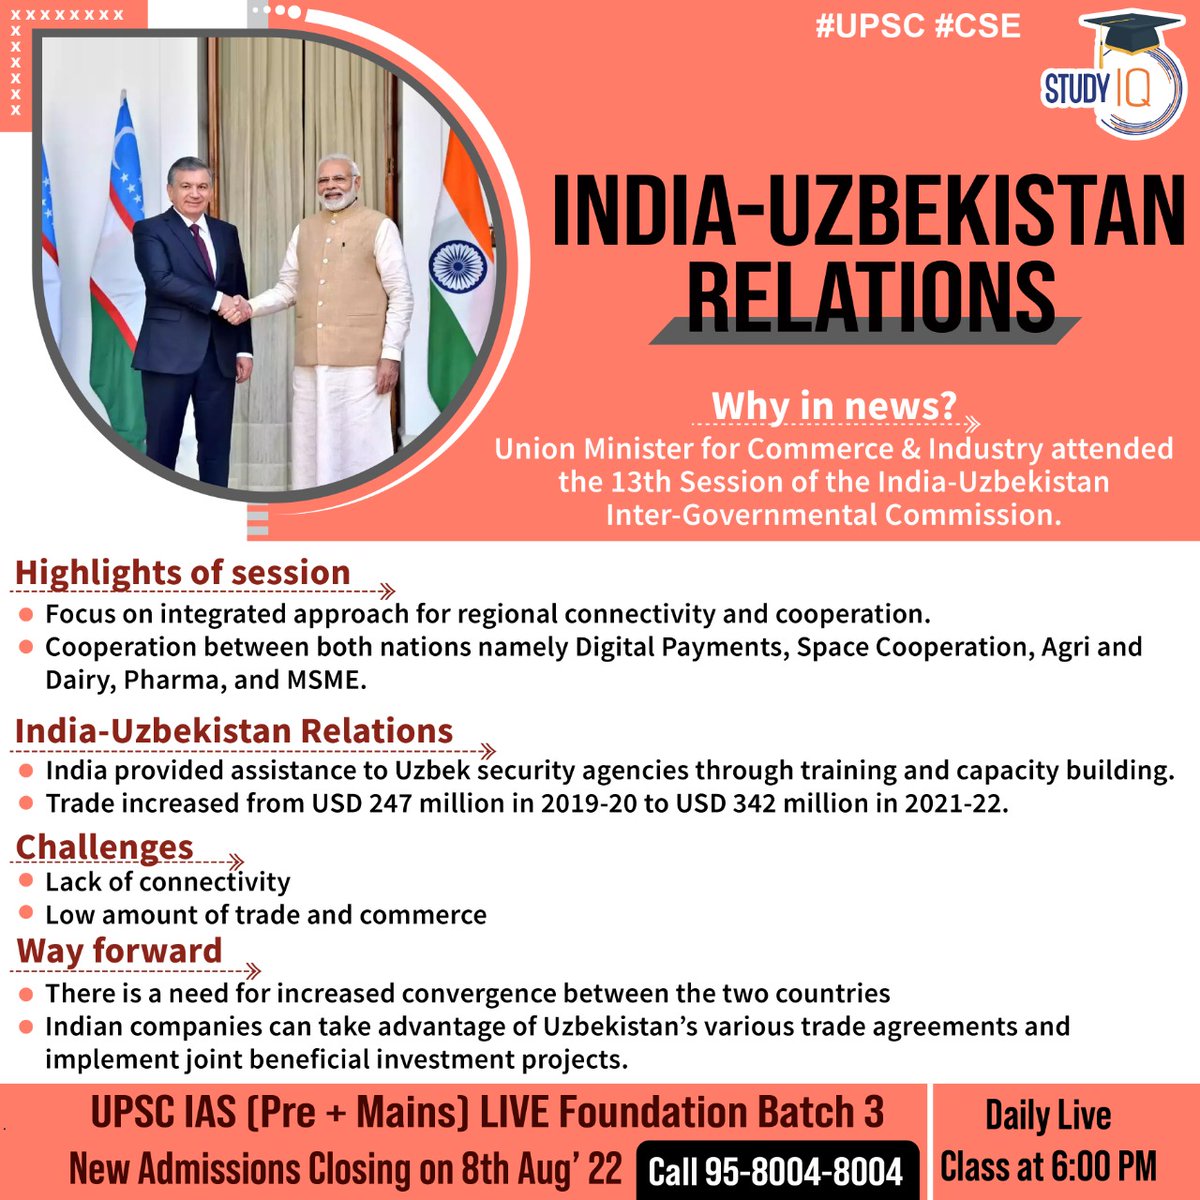 #India- #Uzbekistan Relations 

#indiauzbekistanrelations #relations #upsc #cse #whyinnews #digitalpayments #spacecooperation #trade #india #uzbeksecurityagencies #daity #pharma #MSME #tradeagreements #investmentprojects